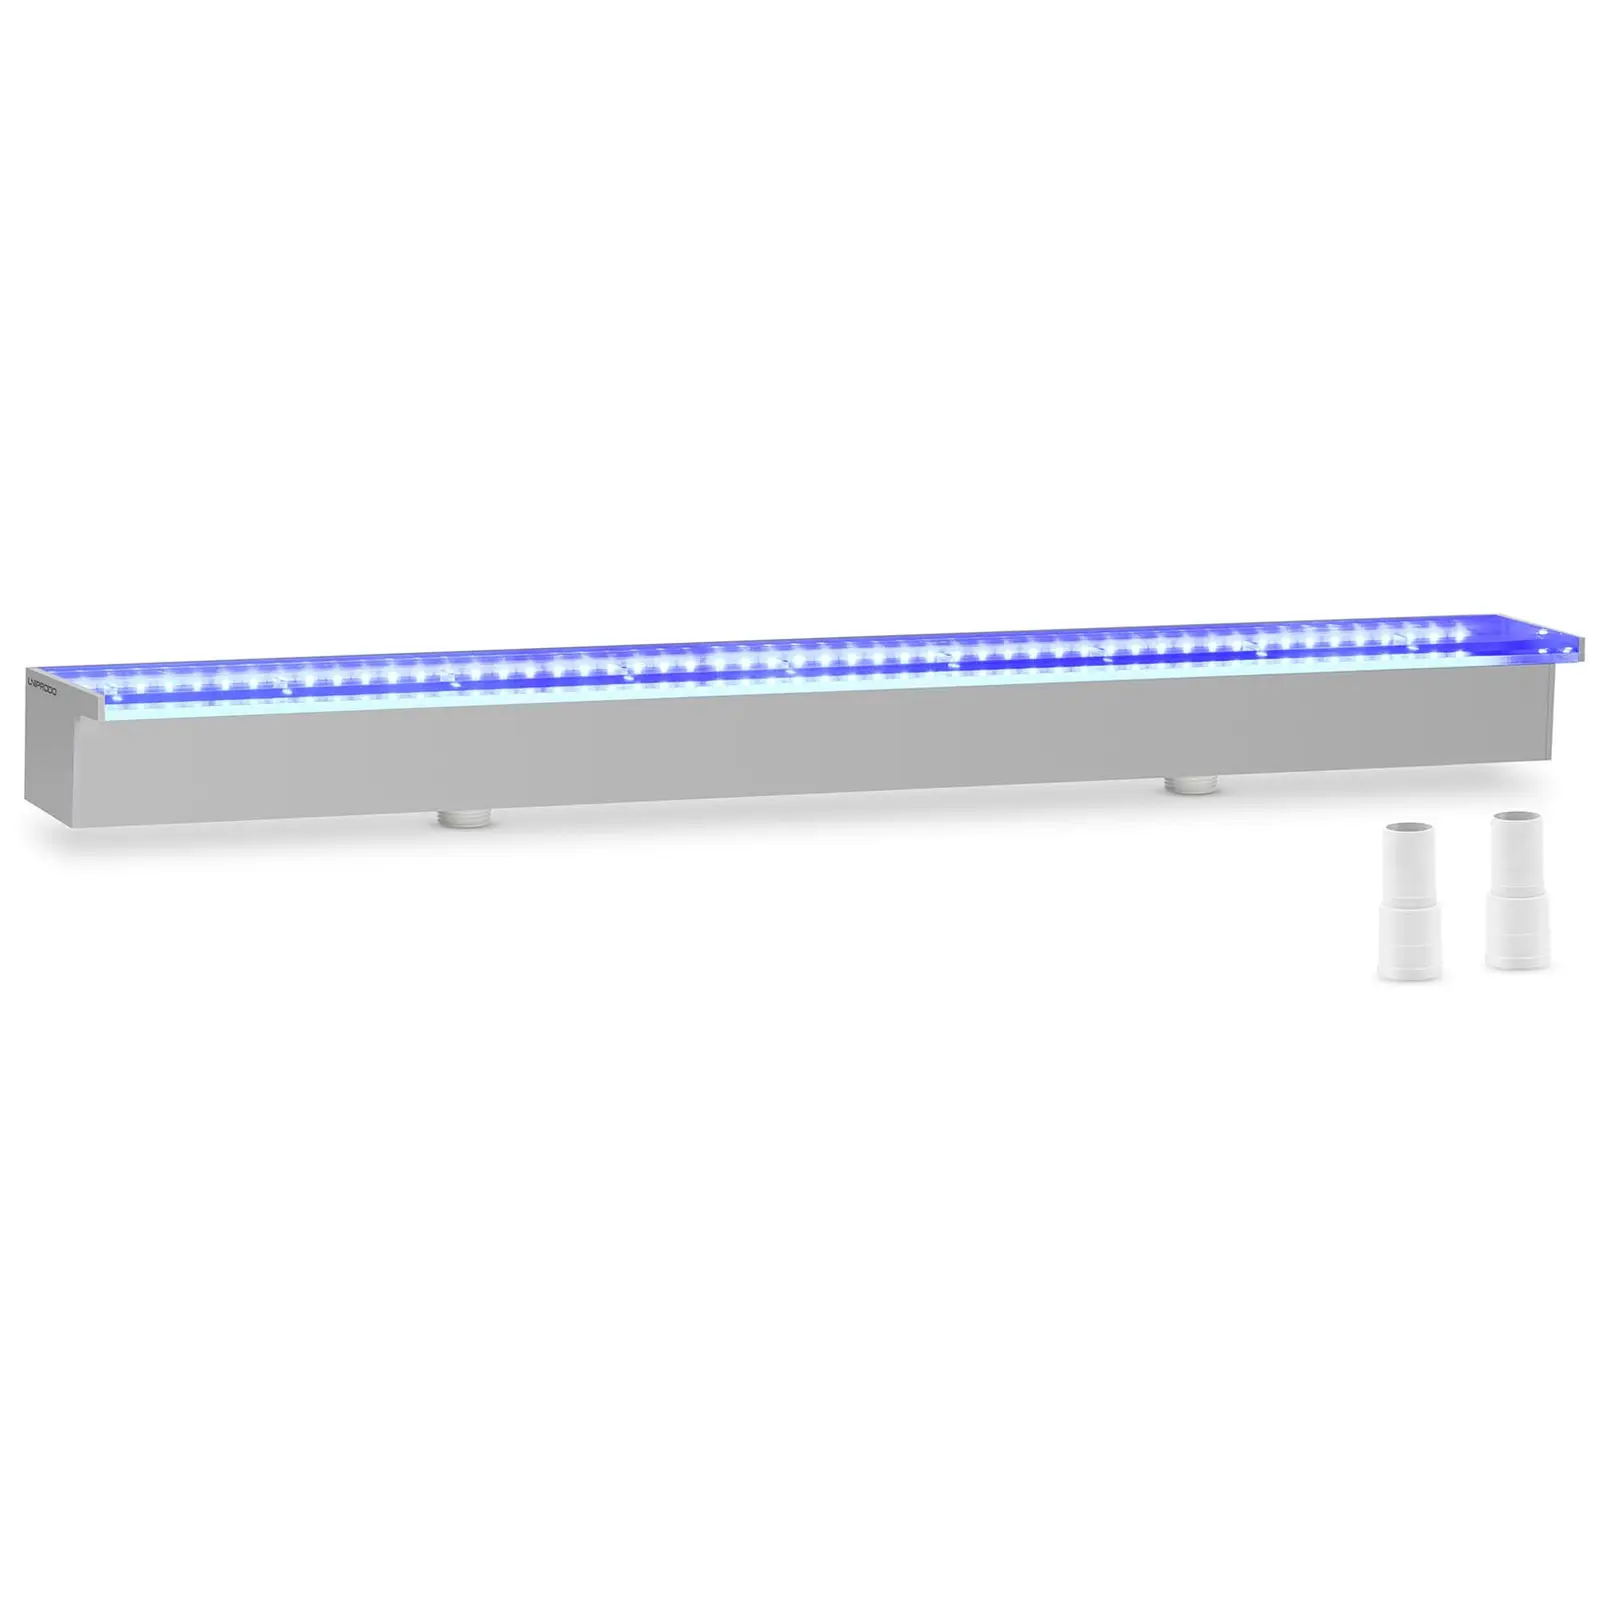 {{marketing_meta_keyword_1}} – 90 cm – LED osvetlenie – modrá/biela